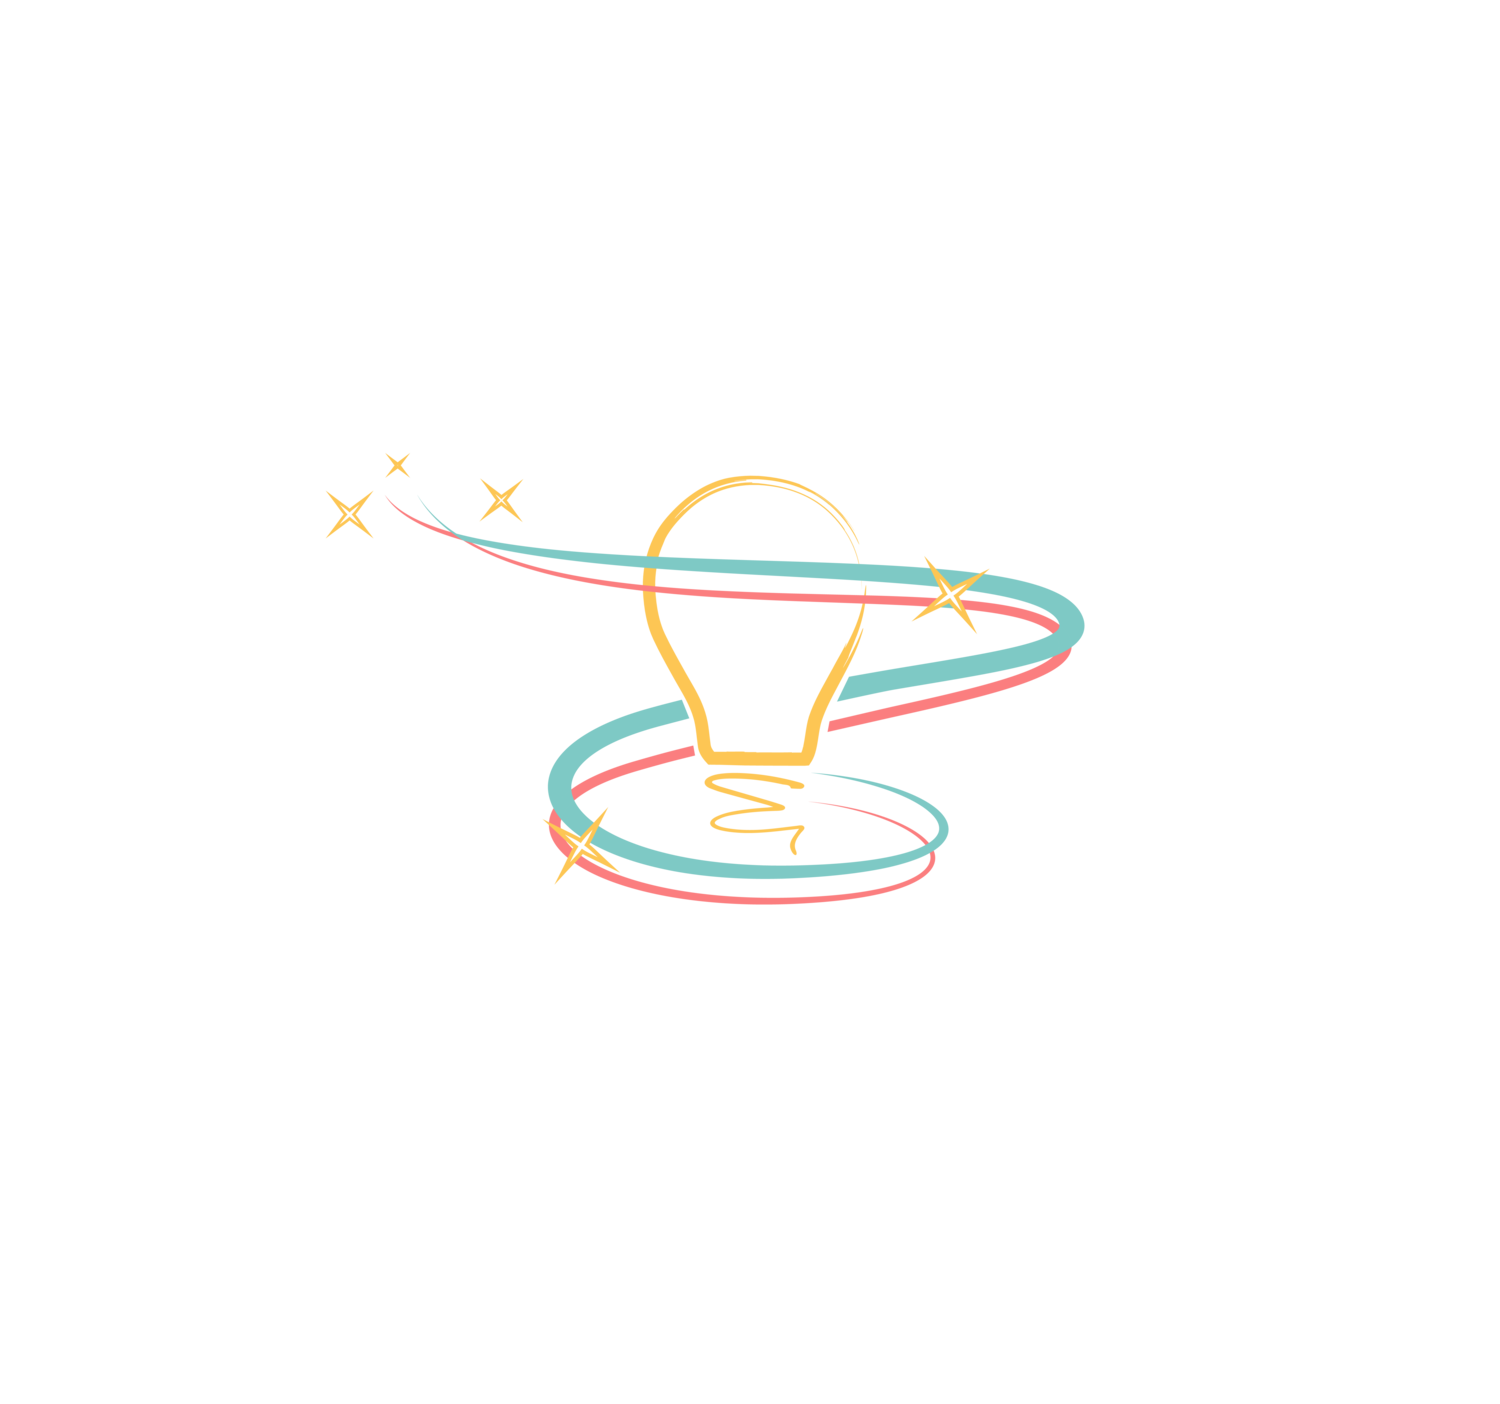 Widespread Wellness